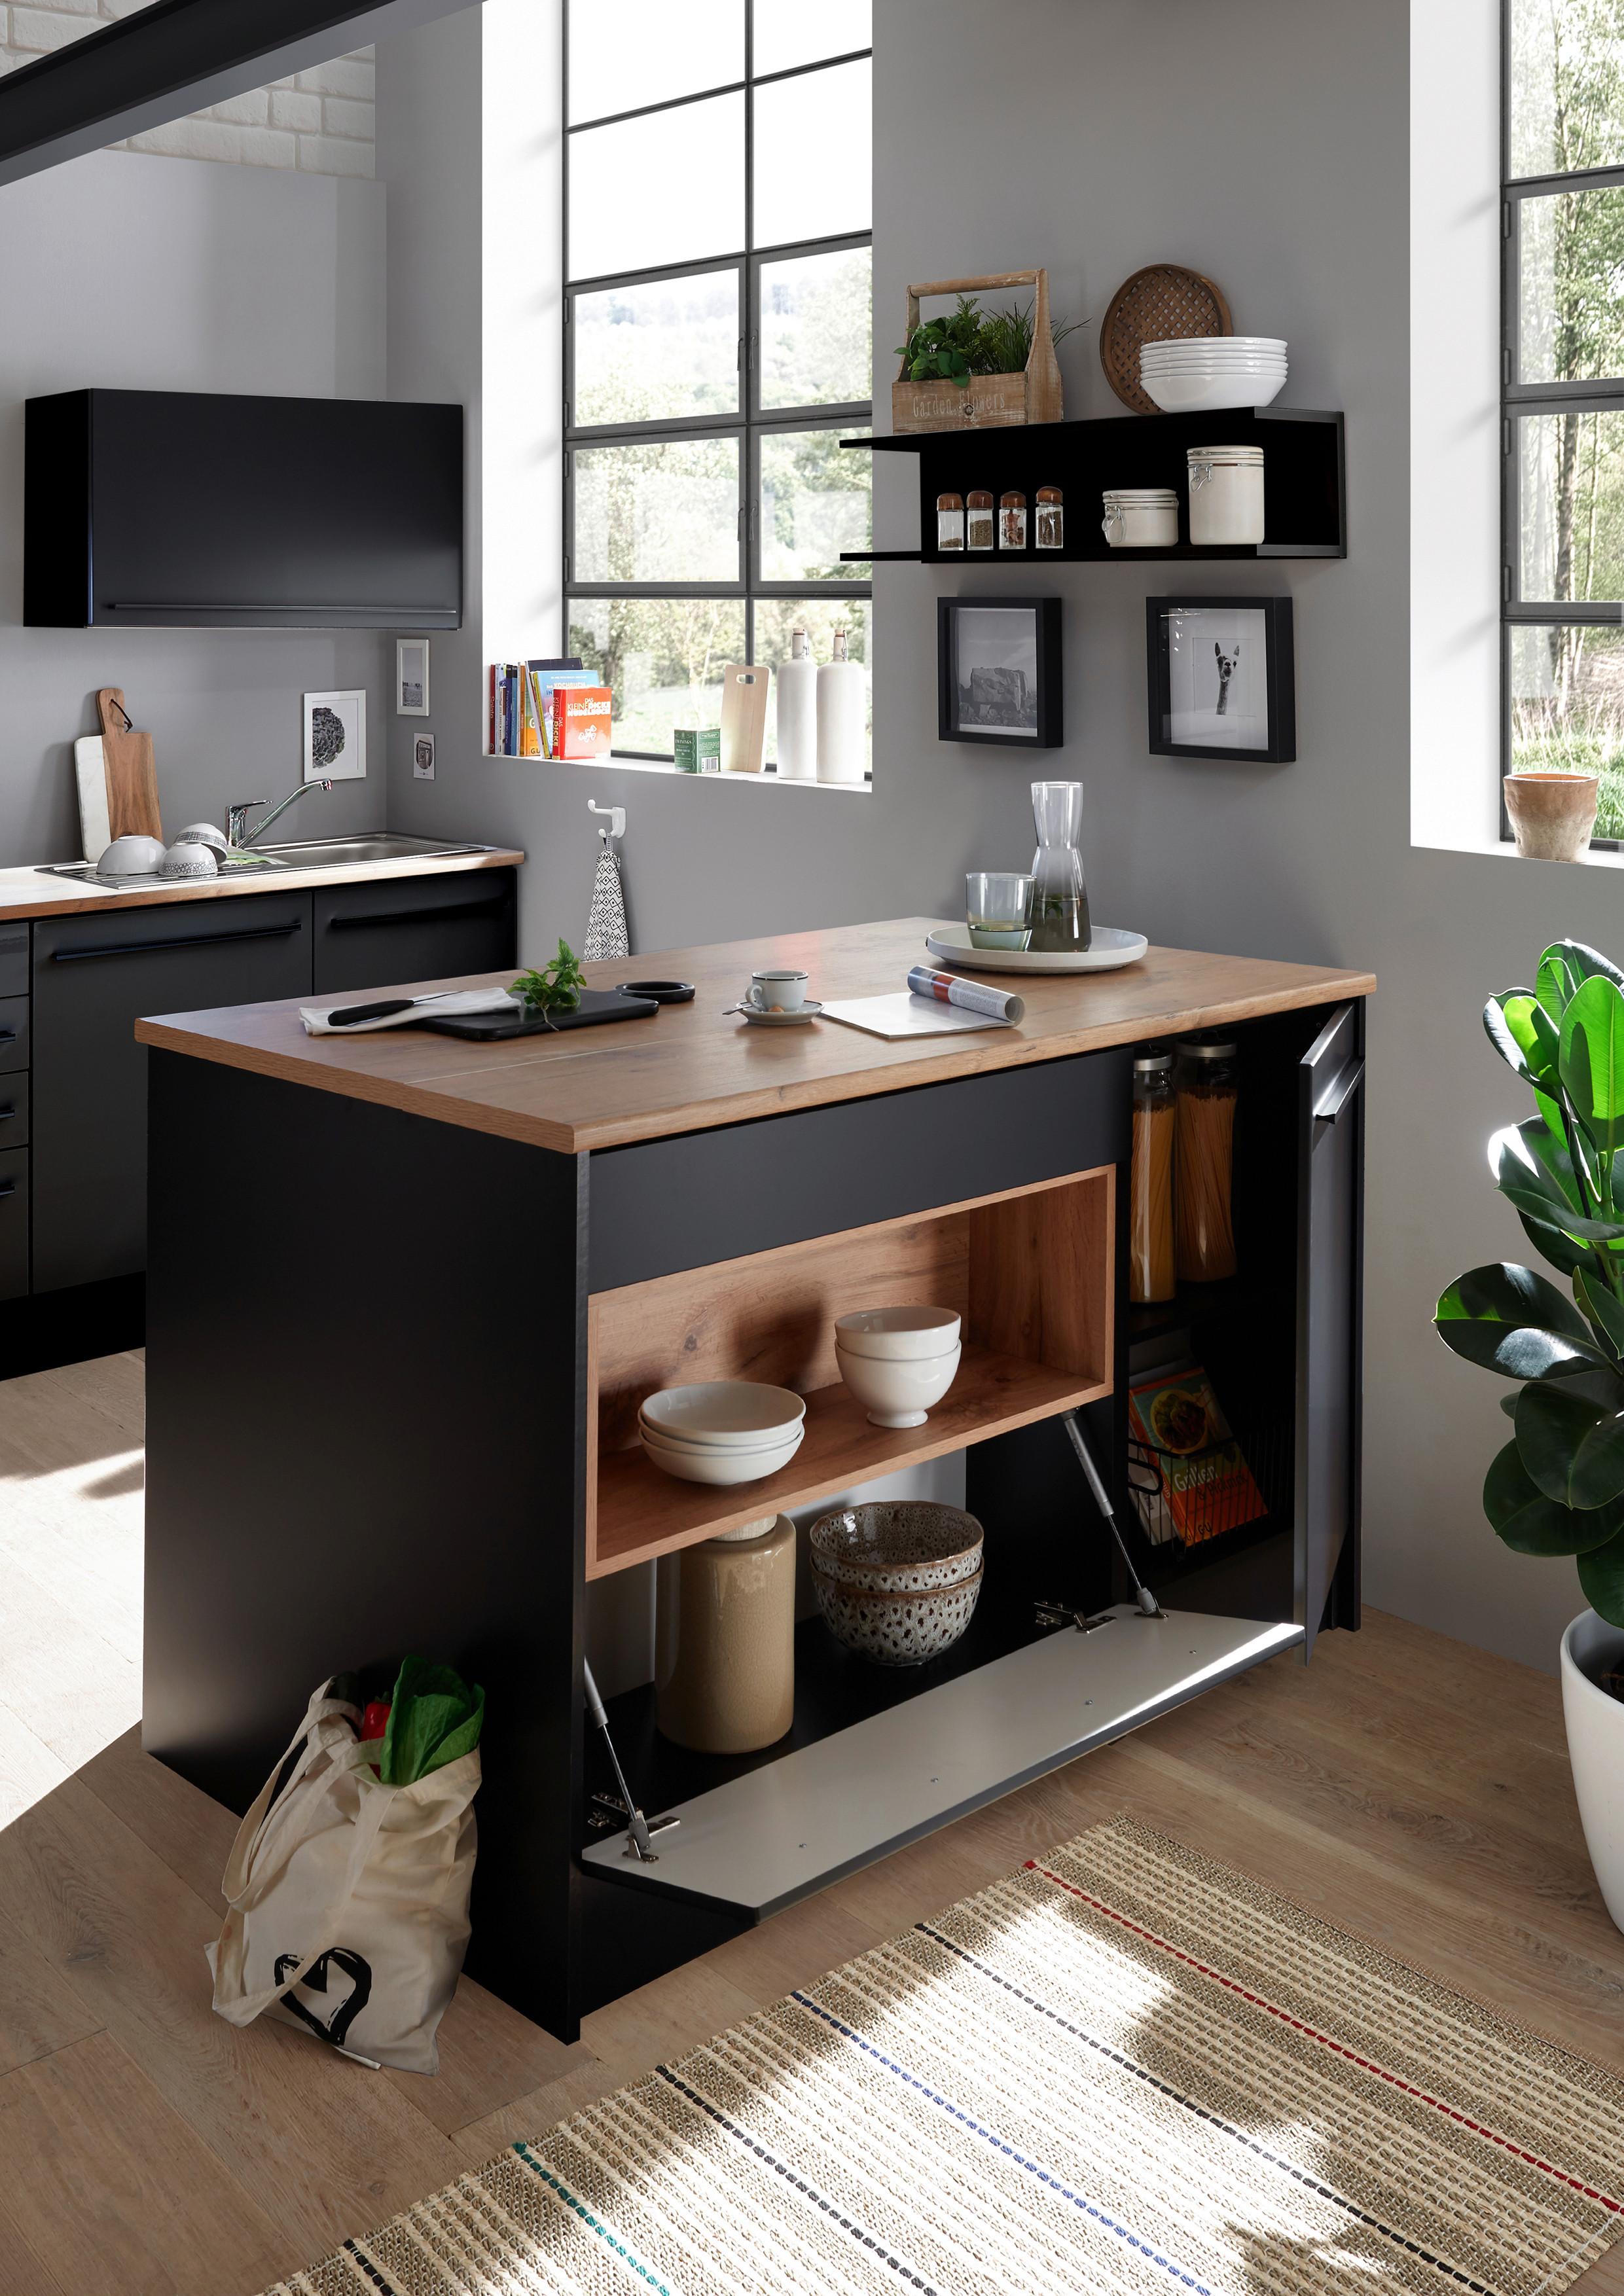 Kuhinjski Otok Jazz - boje hrasta/crna, Modern, drvni materijal (140/90/90cm) - Modern Living